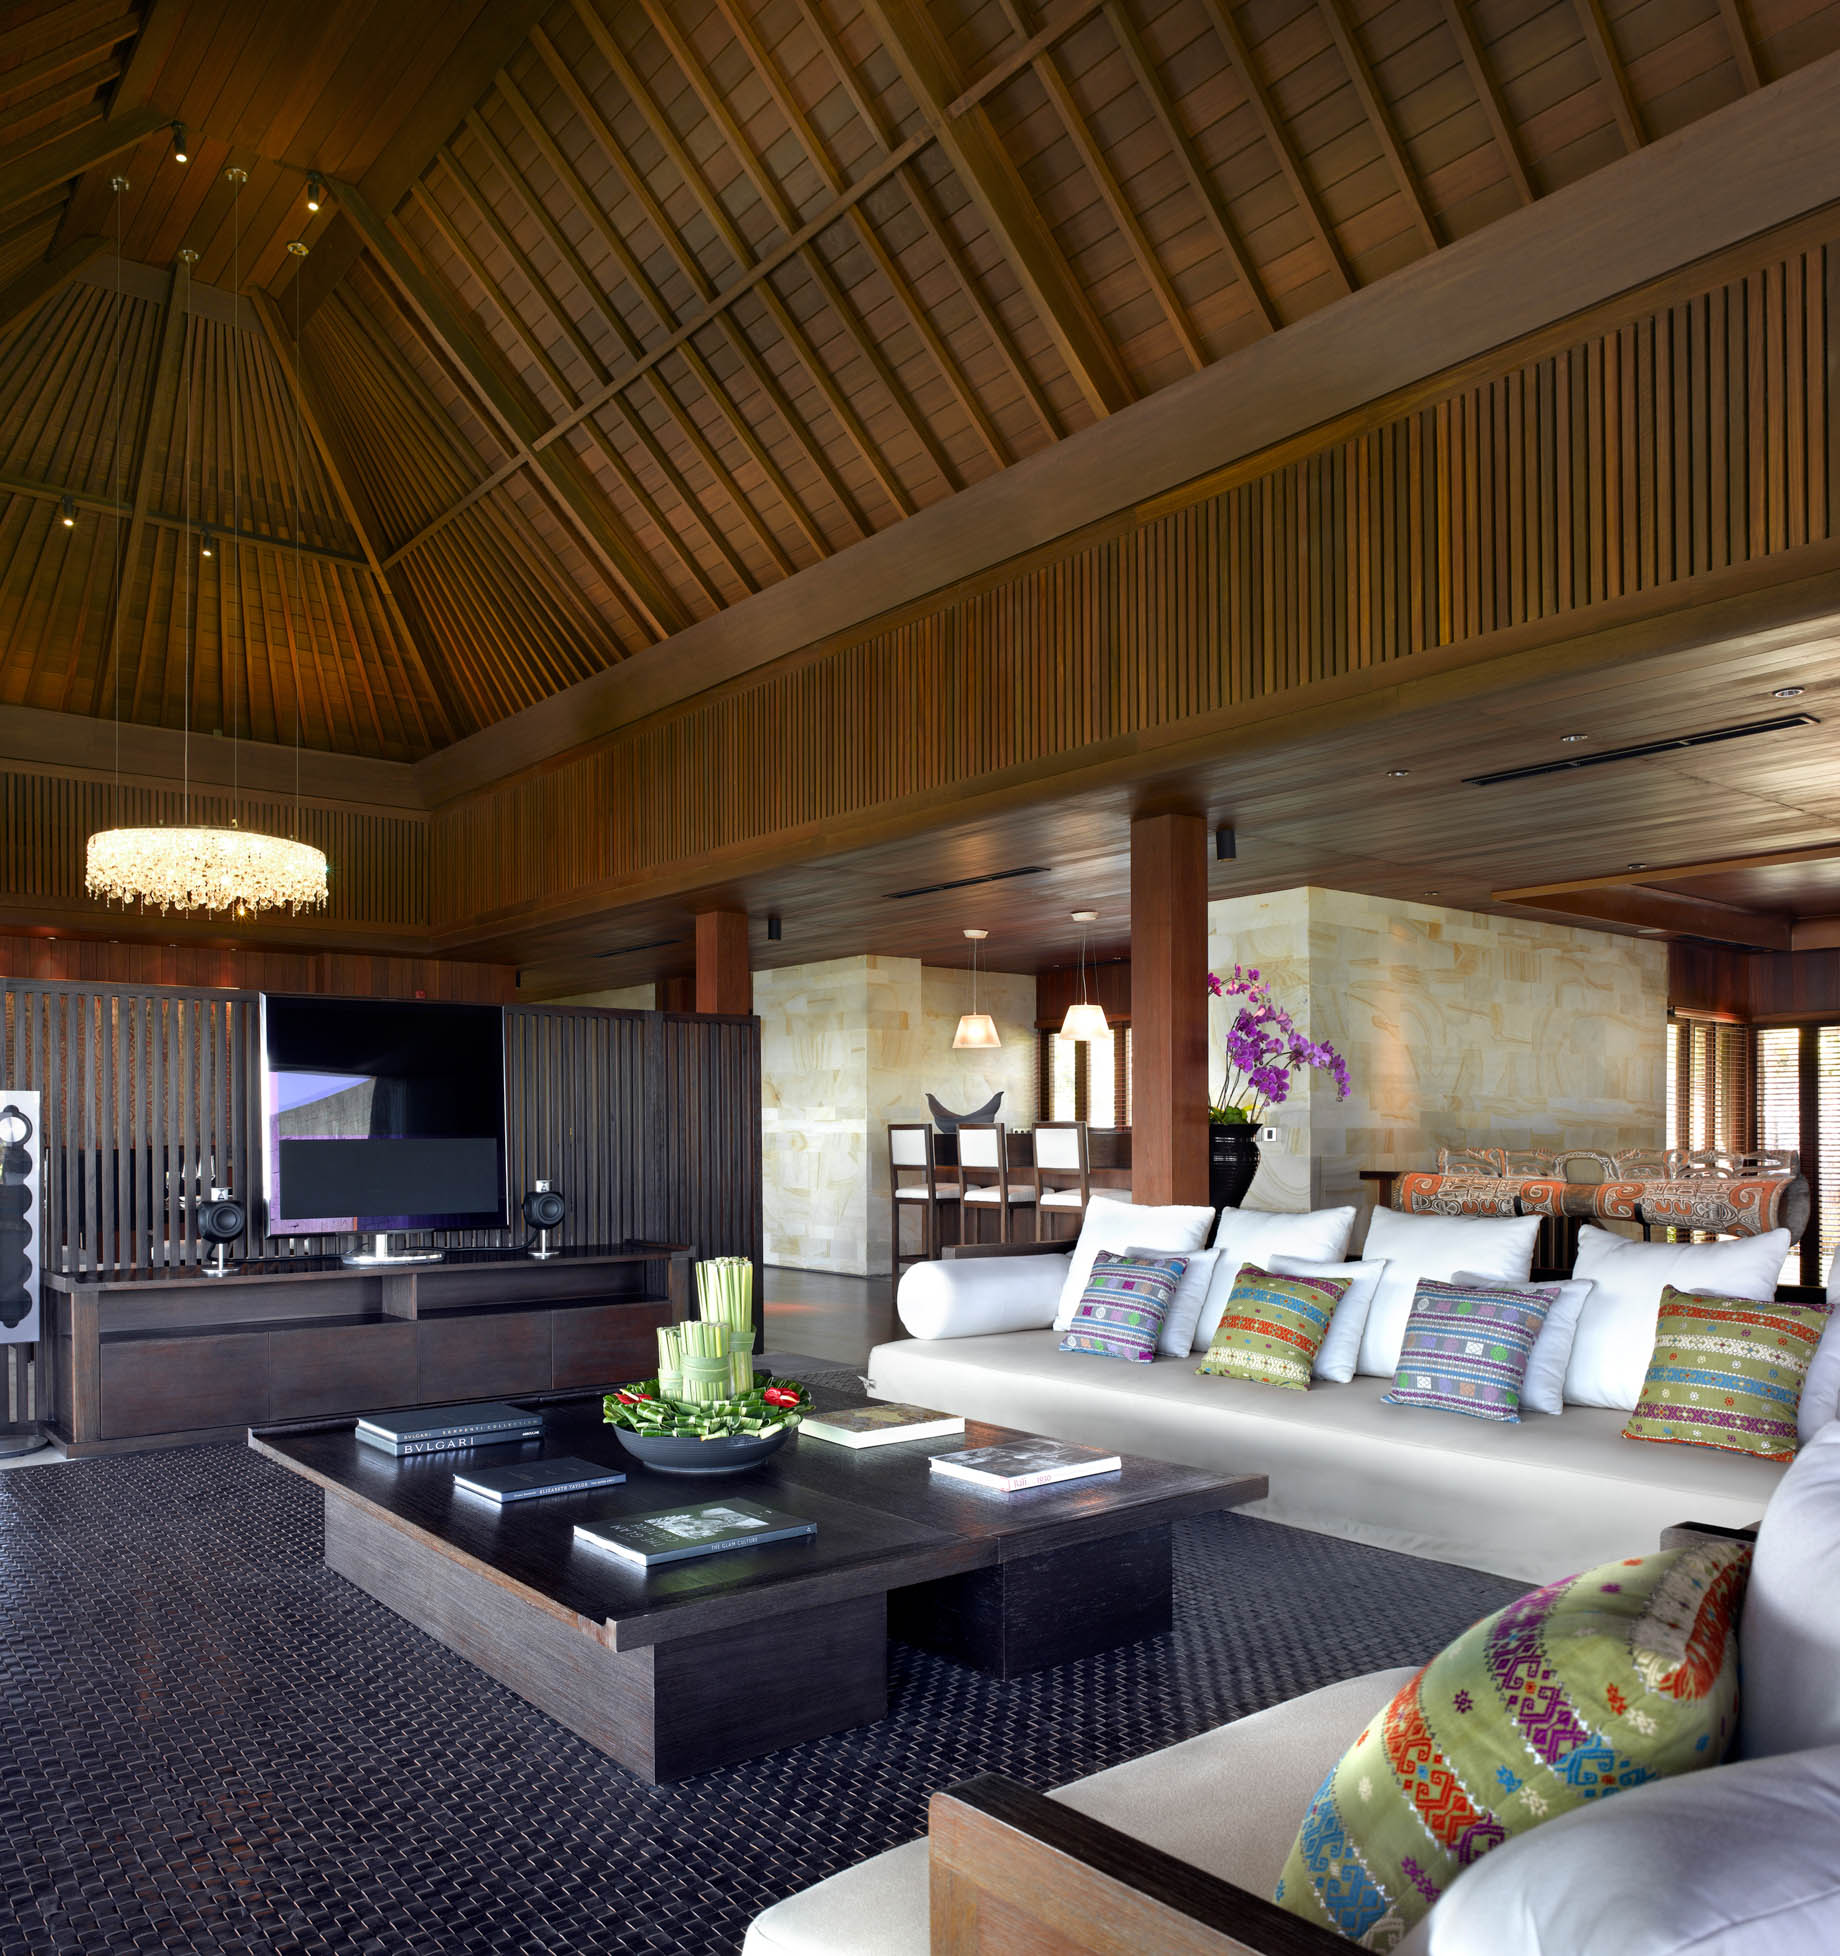 Bvlgari Resort Bali – Uluwatu, Bali, Indonesia – The Mansions Living Room